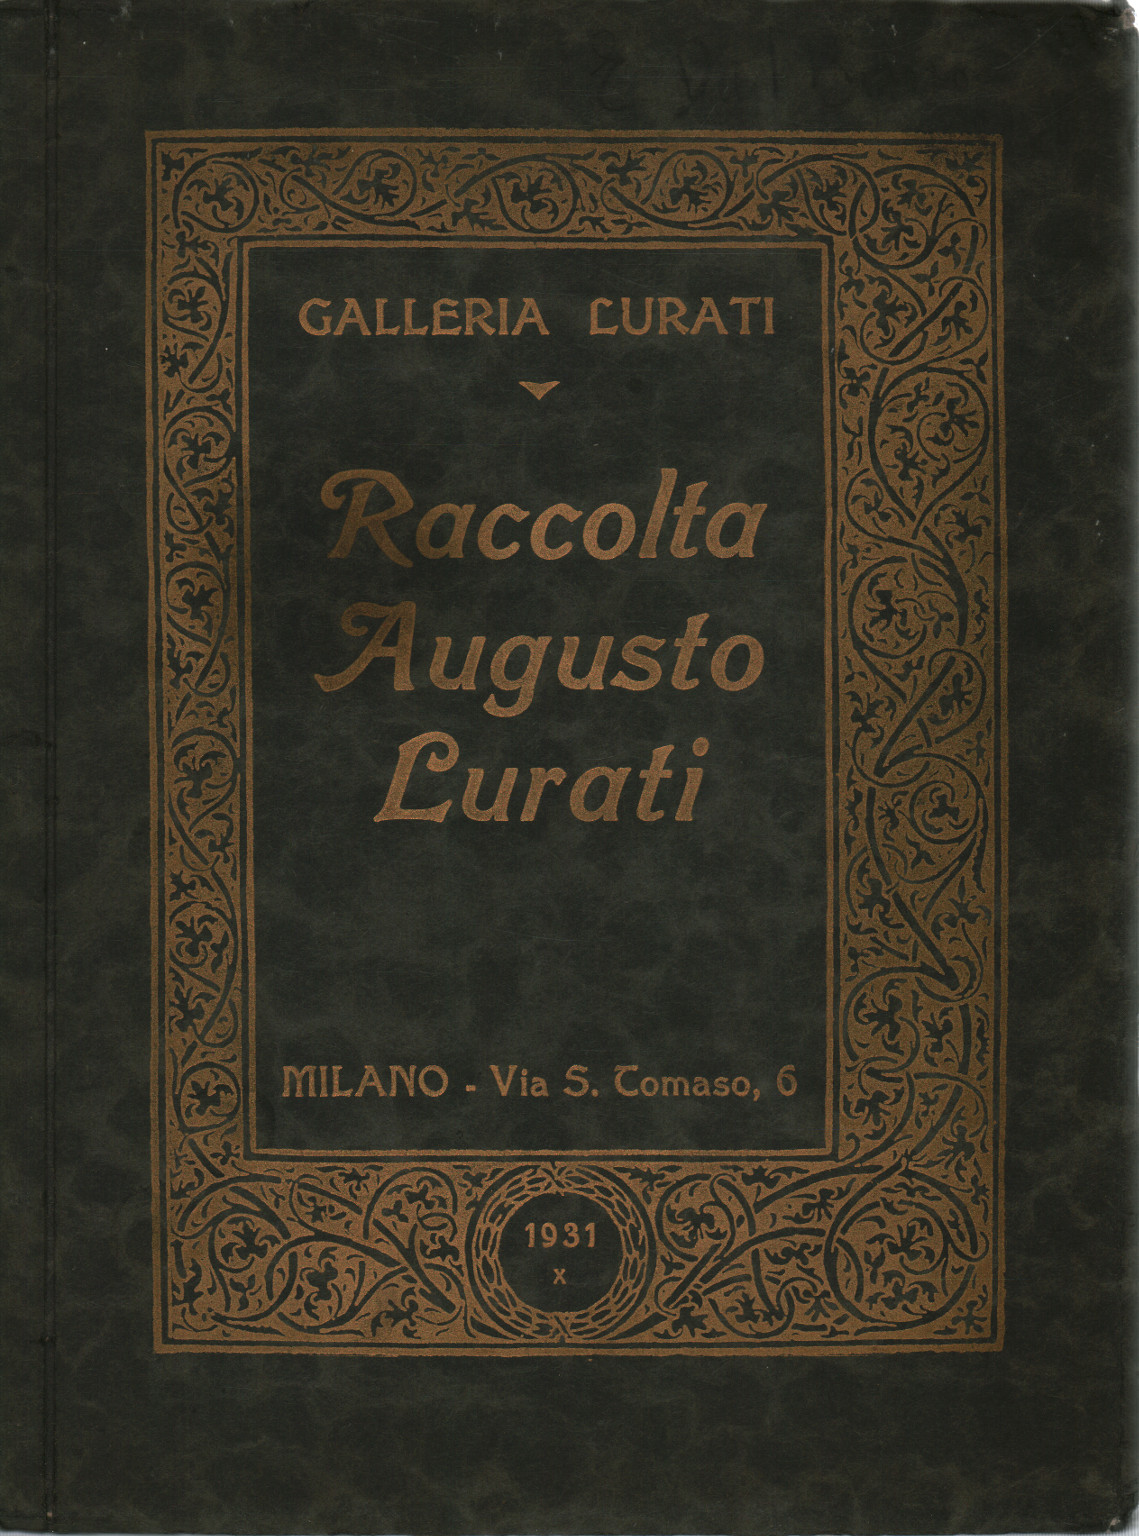 Collection Augusto Lurati, s.a.